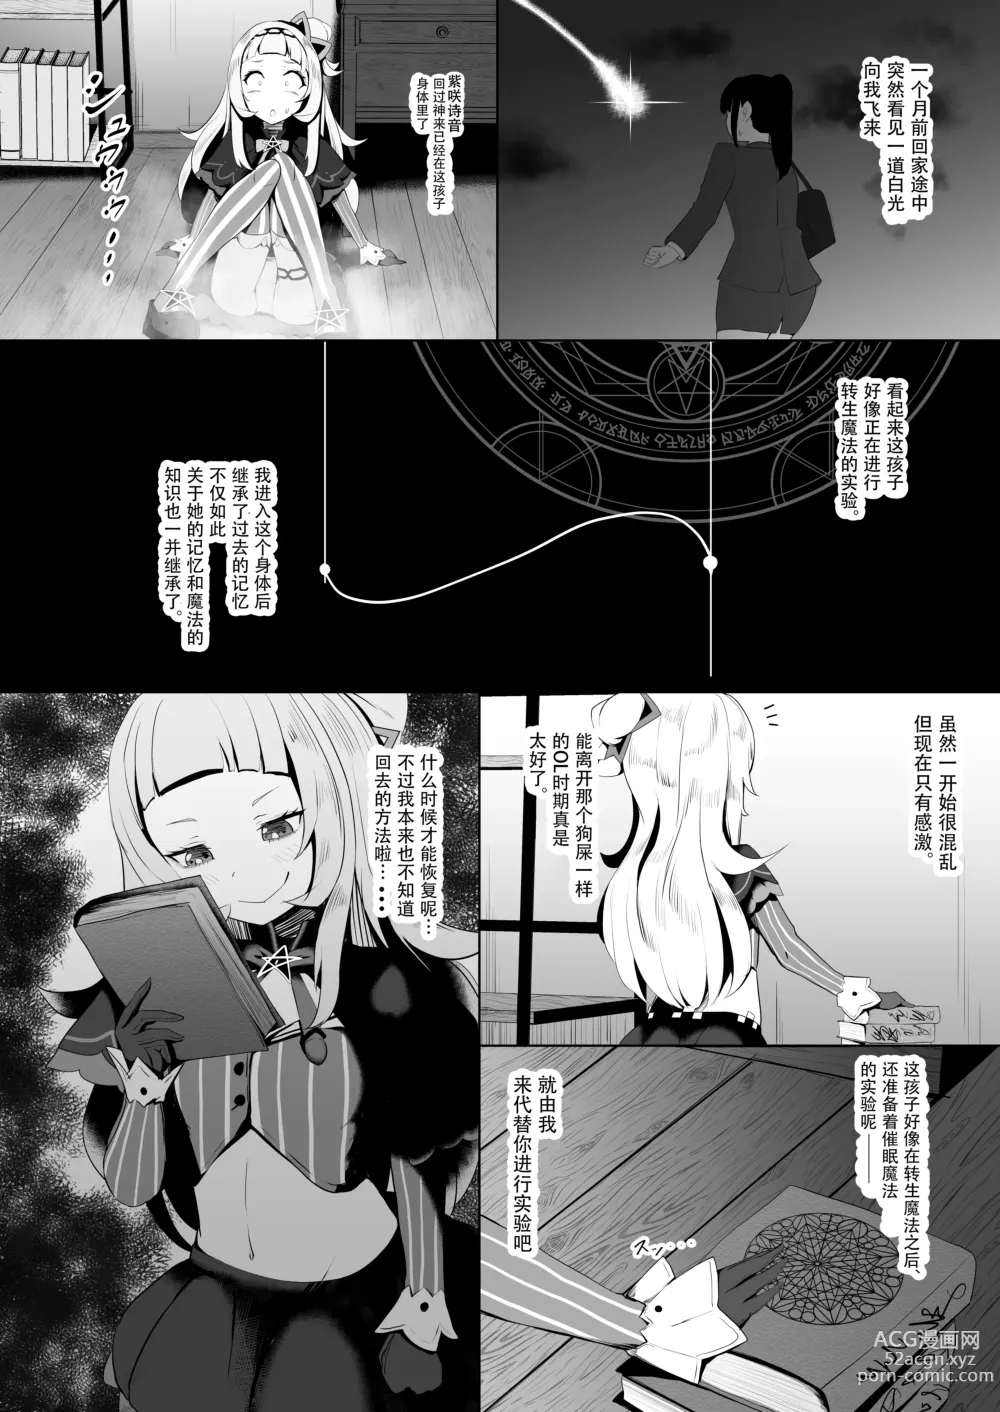 Page 6 of doujinshi 转生成为紫咲诗音, 总之先卖掉阿库娅酱